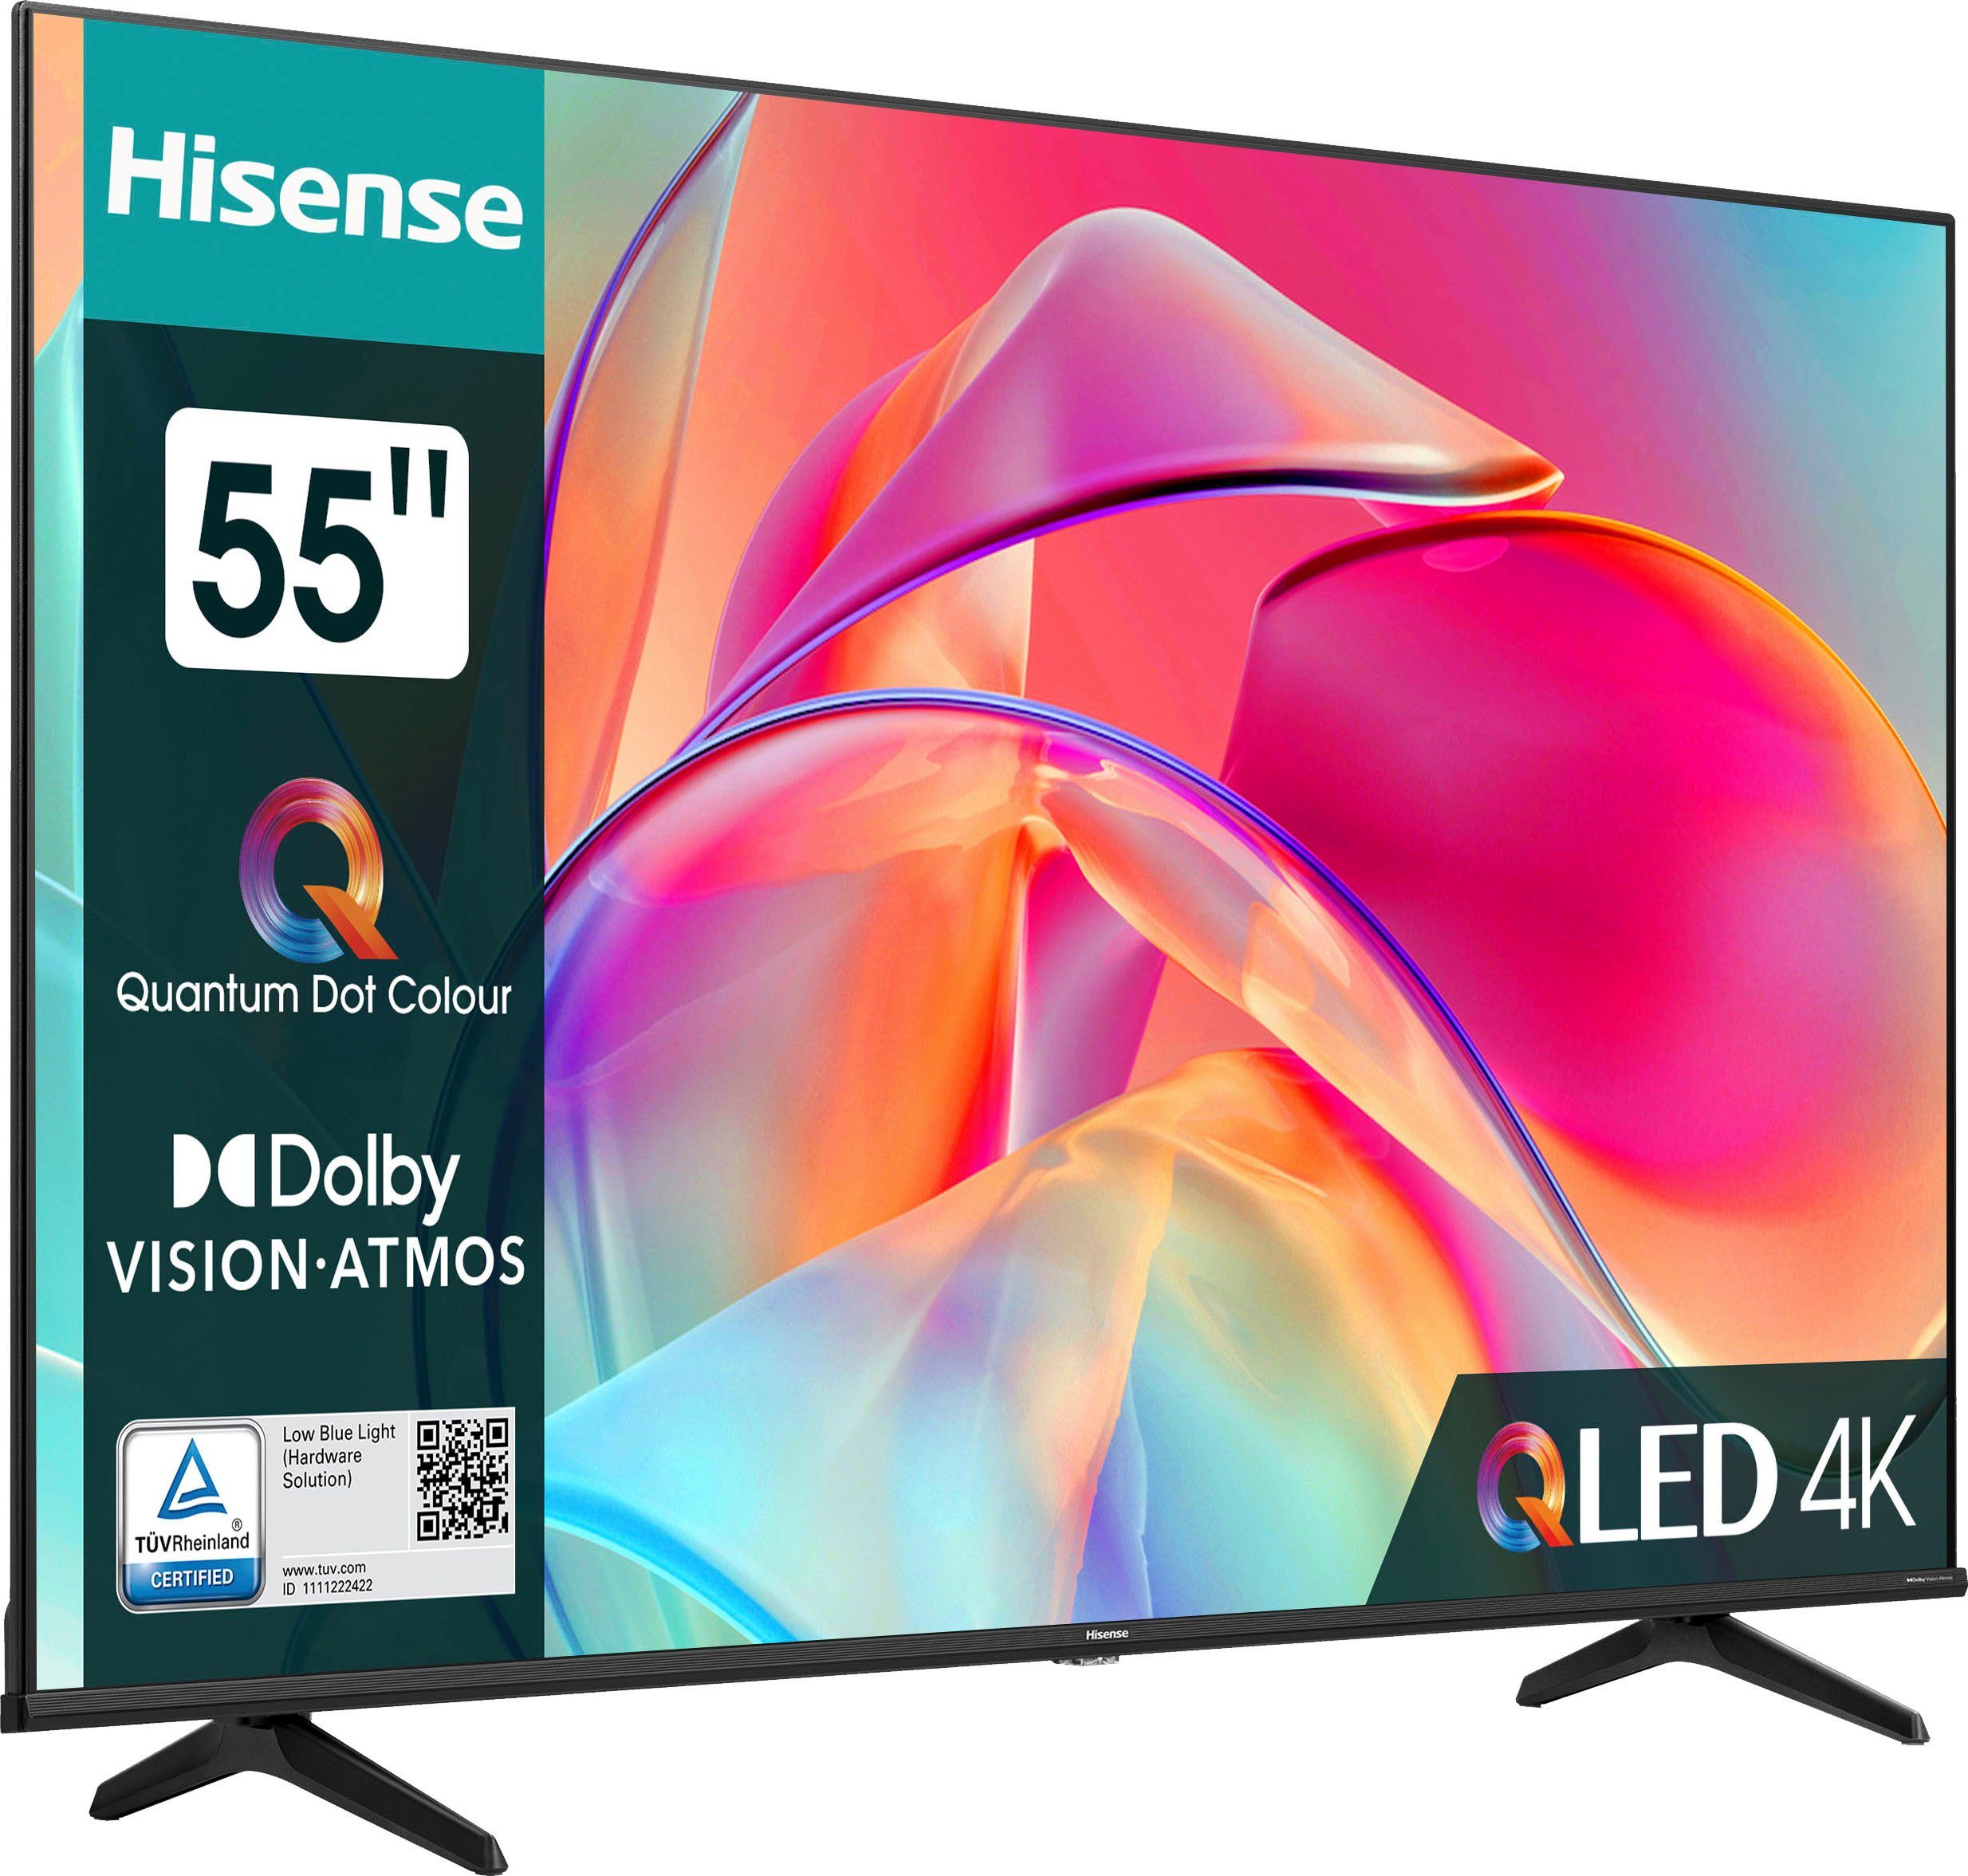 Hisense QLED-Fernseher (139 Zoll, Smart-TV) Ultra 55E77KQ cm/55 4K HD,